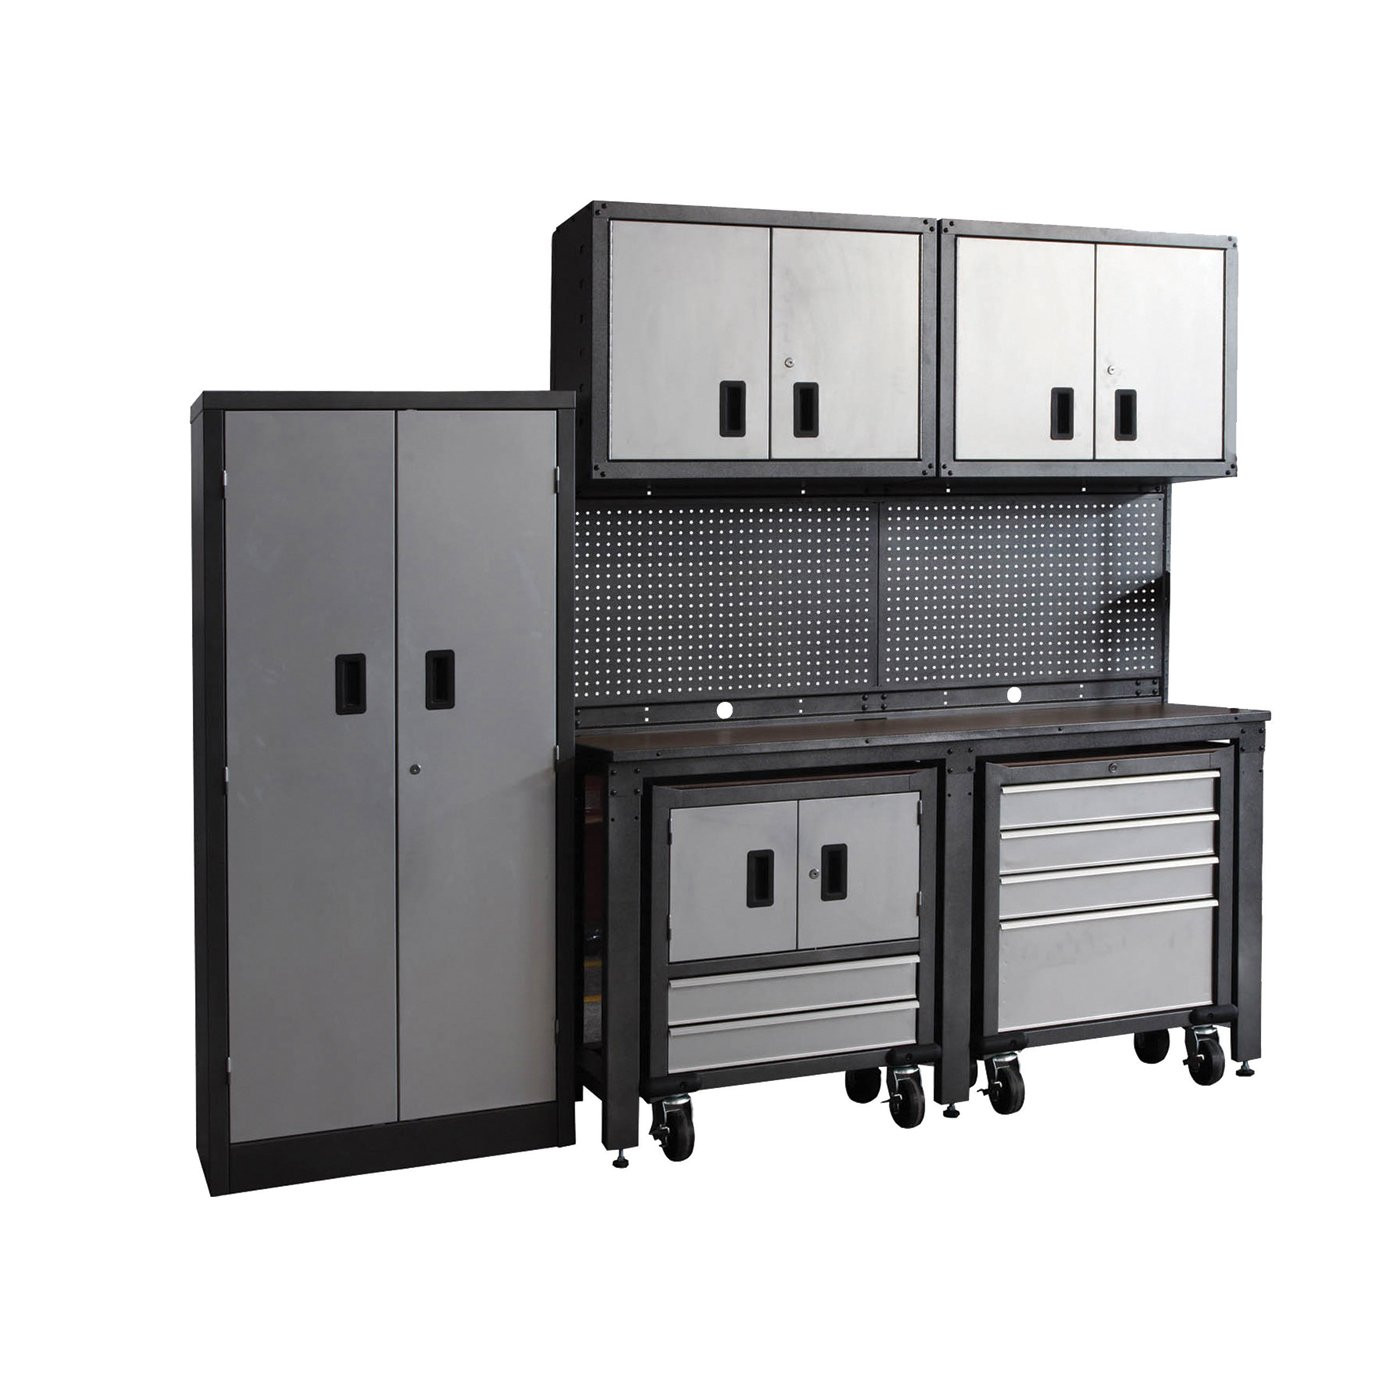 Best ideas about Metal Garage Storage Cabinets
. Save or Pin International Metal Garage Cabinet Now.